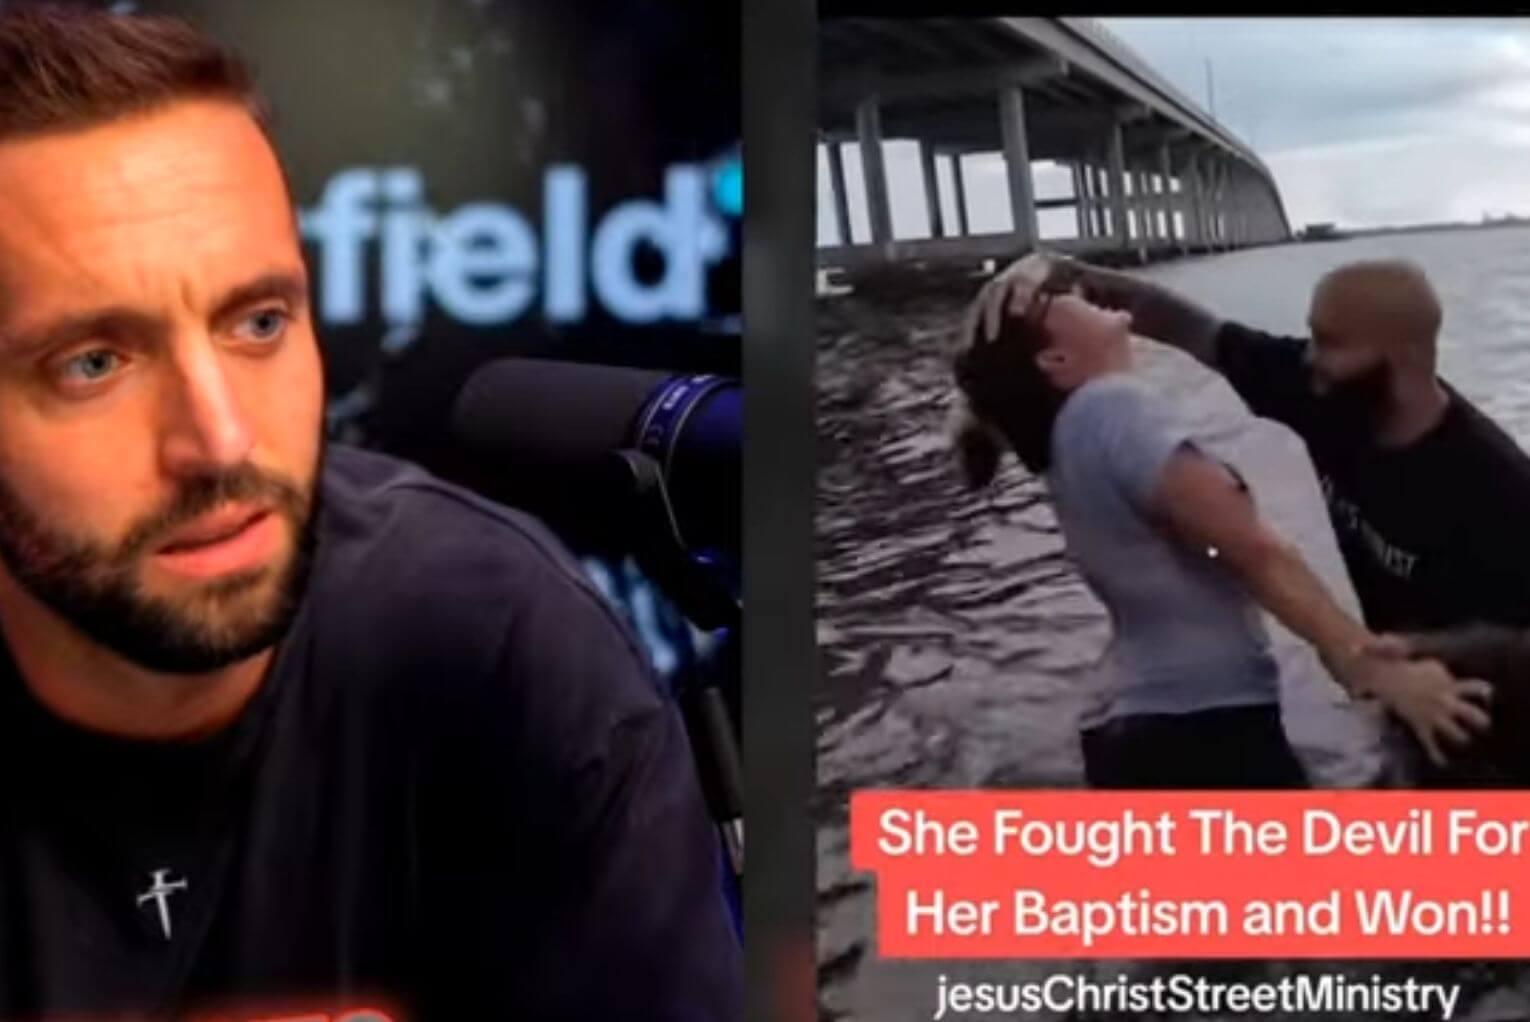 WATCH: Woman Manifests Demon During Baptism